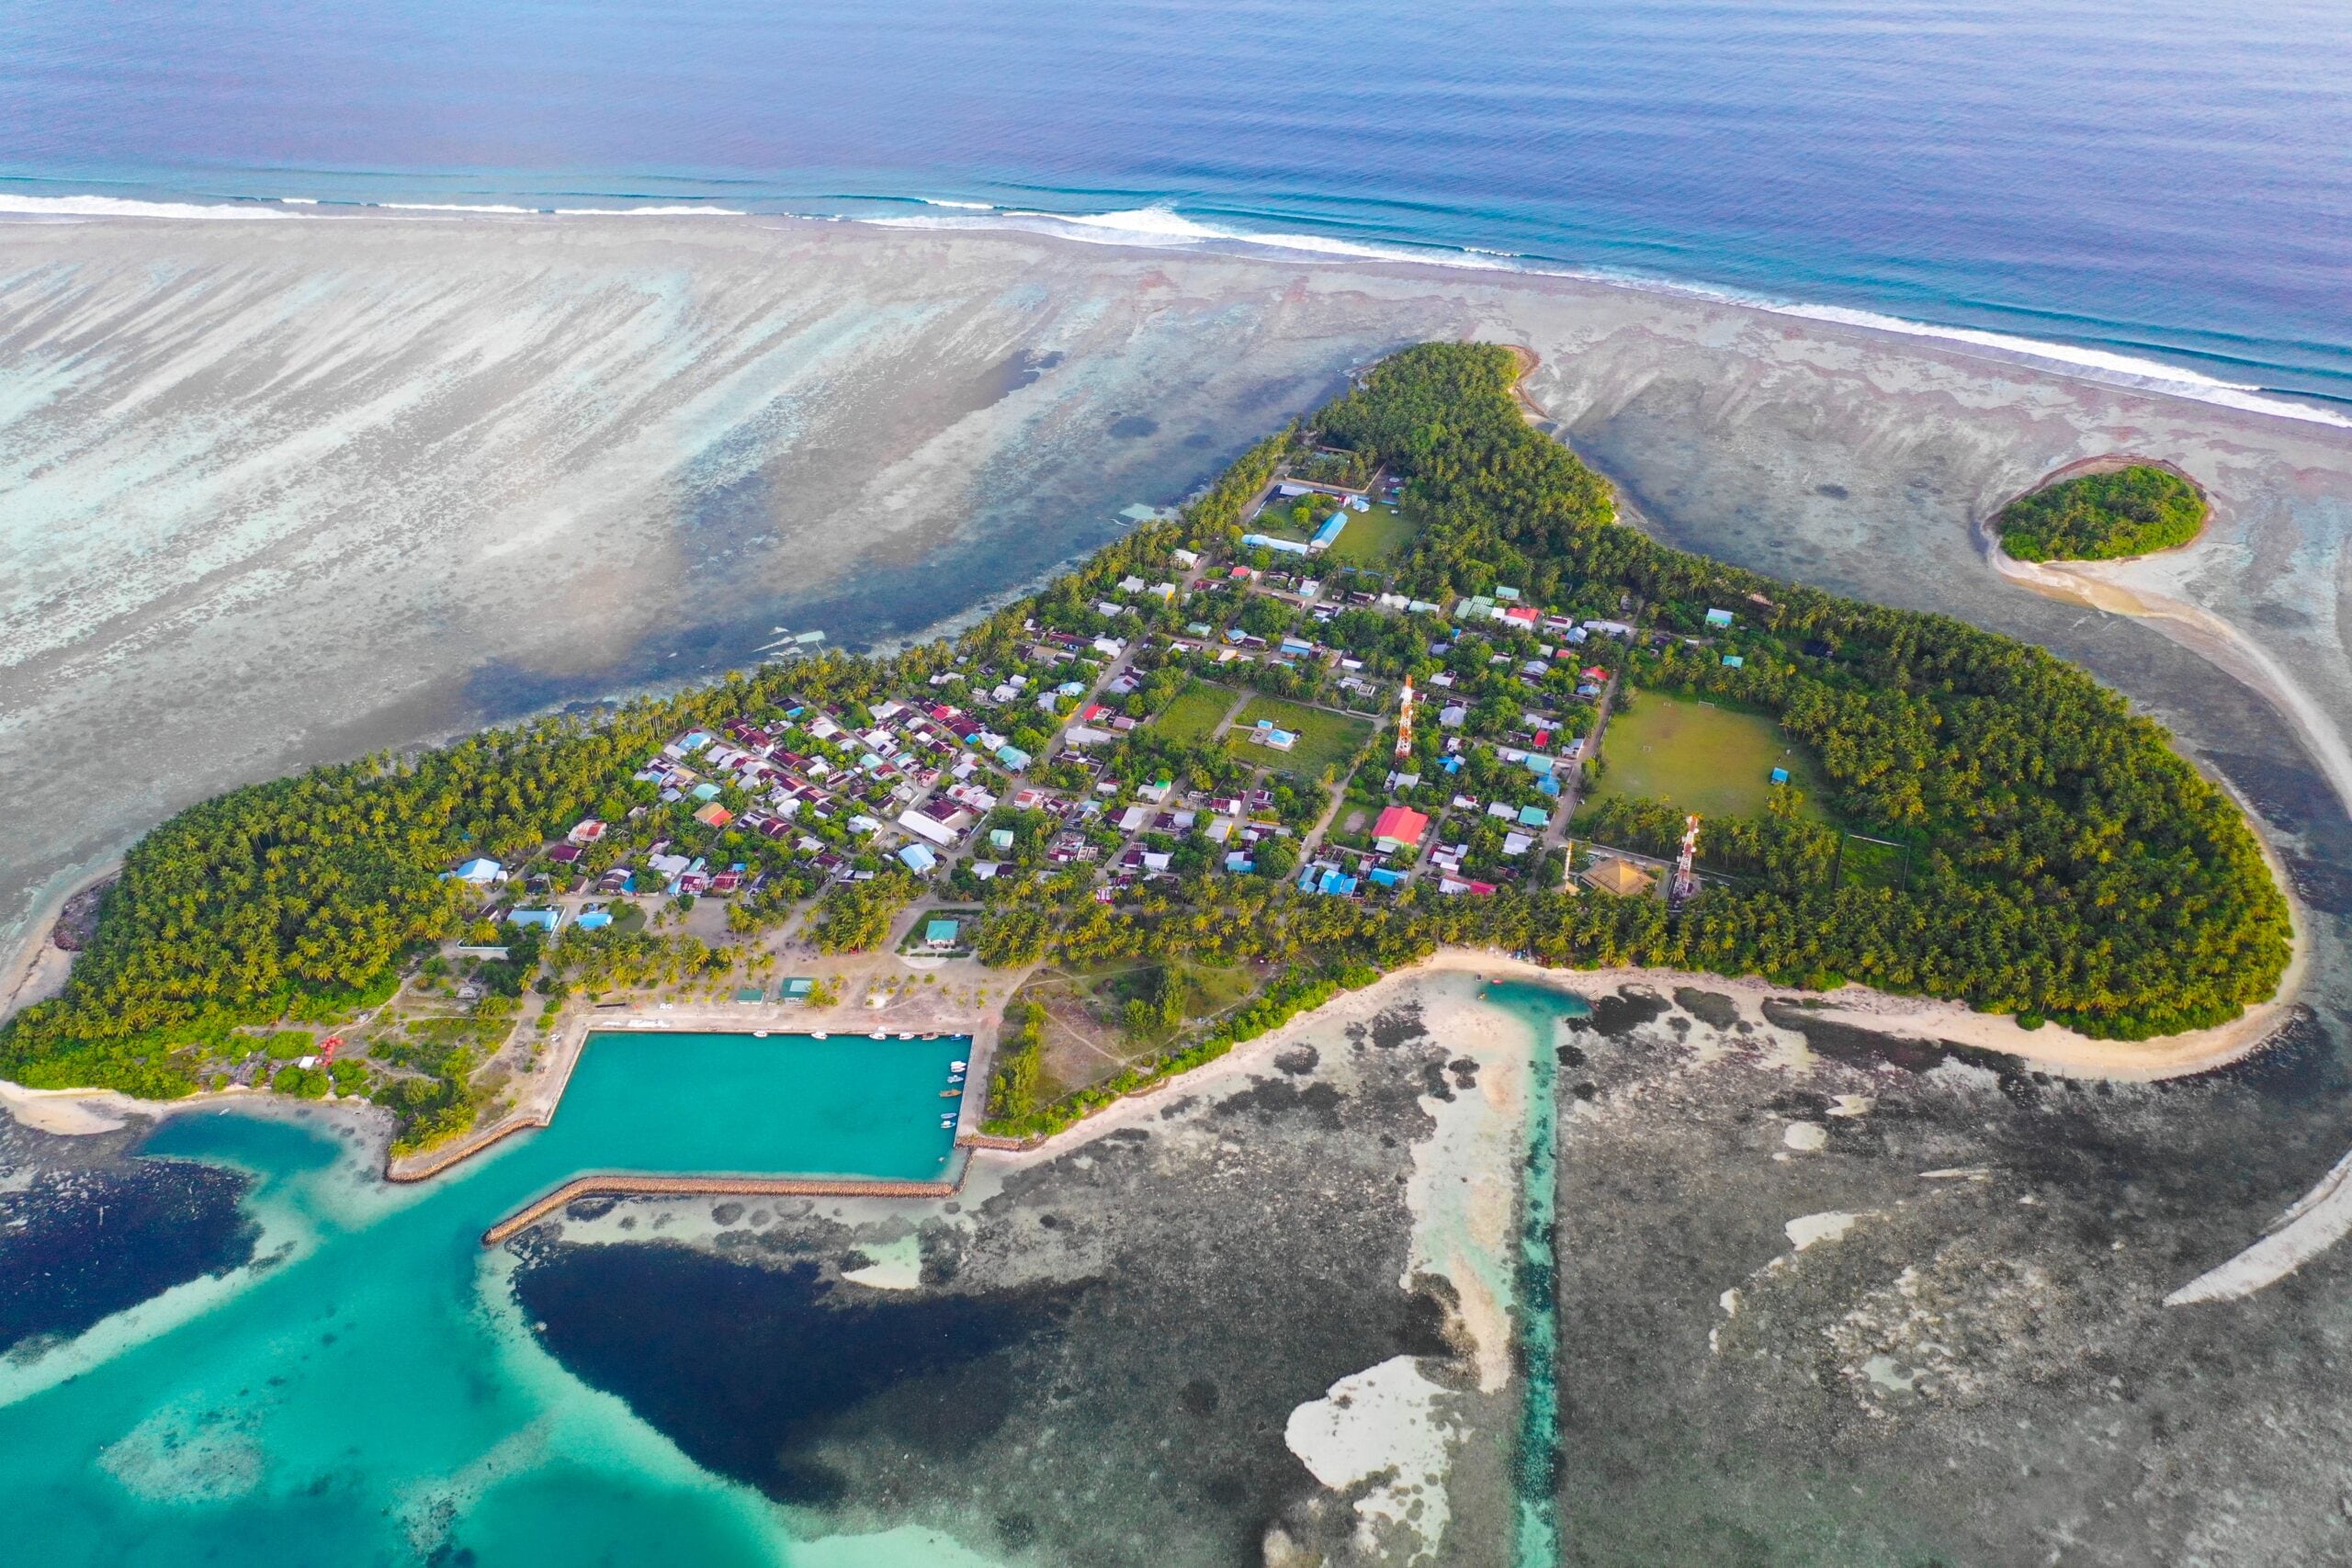 Maldives Islands scaled